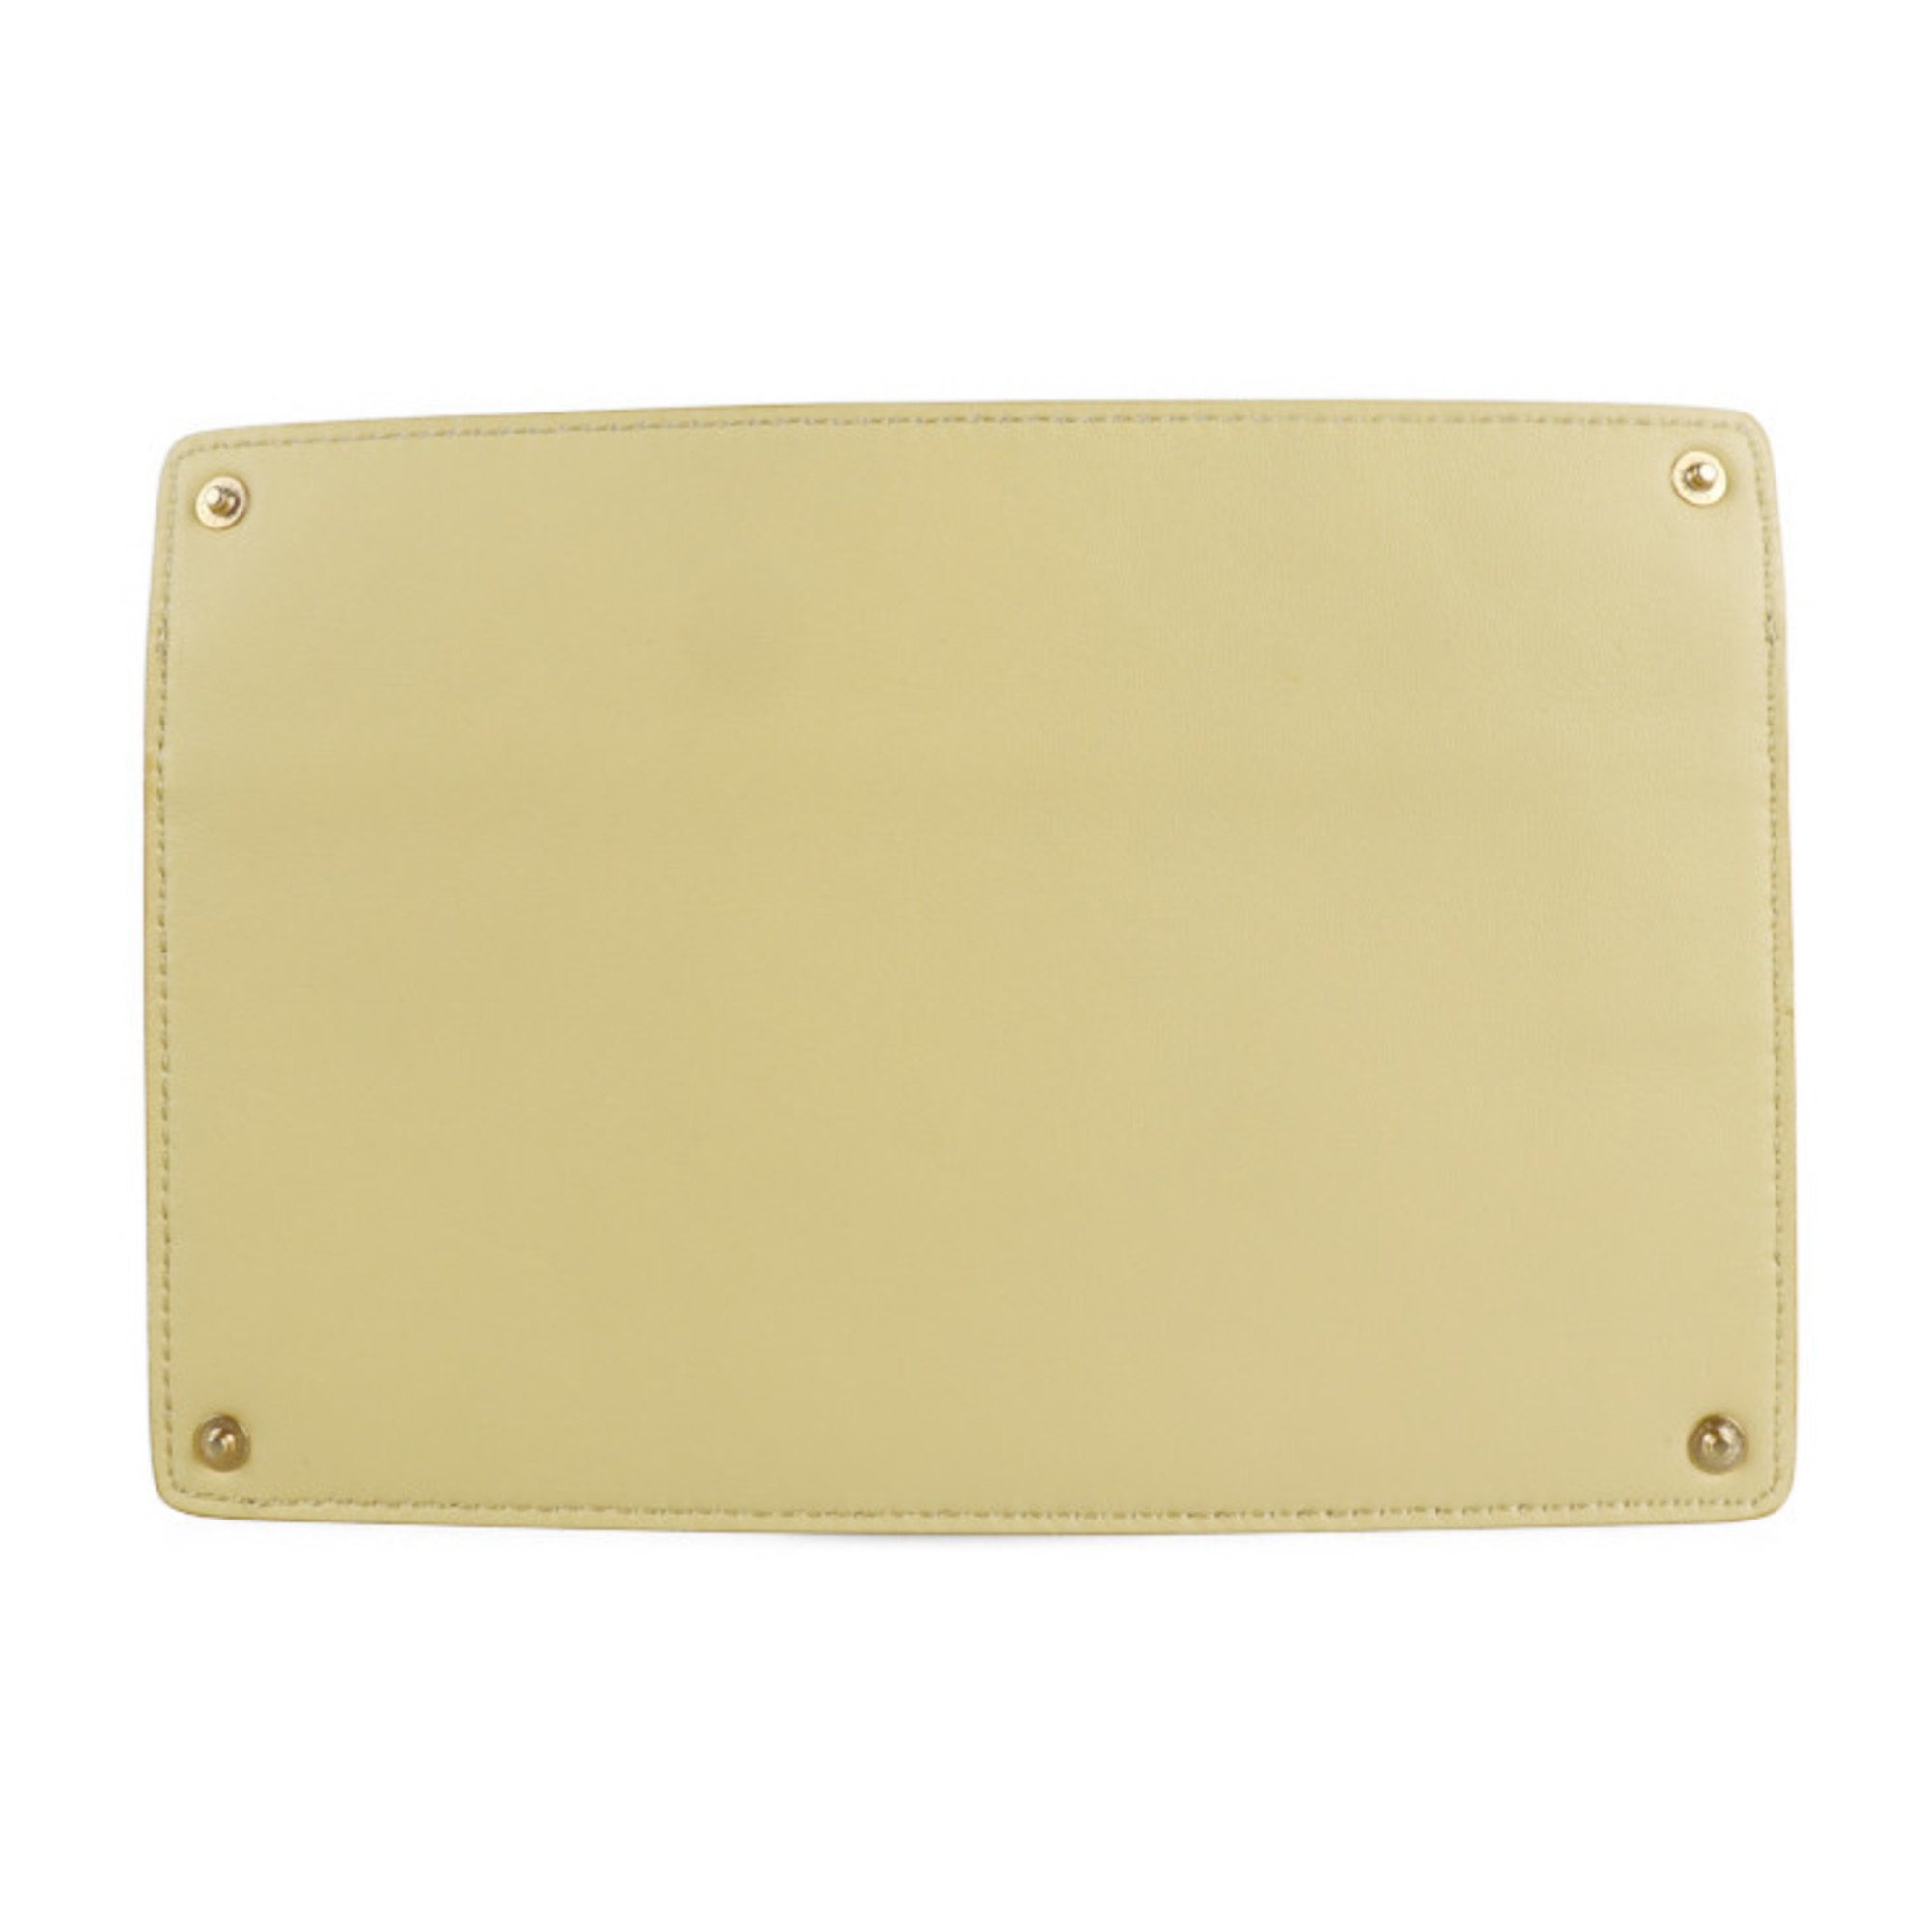 FENDI Fendi Peekaboo Pocket Pouch 7AR907 Nappa Leather SEMOLINO Cream Yellow Series Gold Metal Fittings Accessory Bag-in for